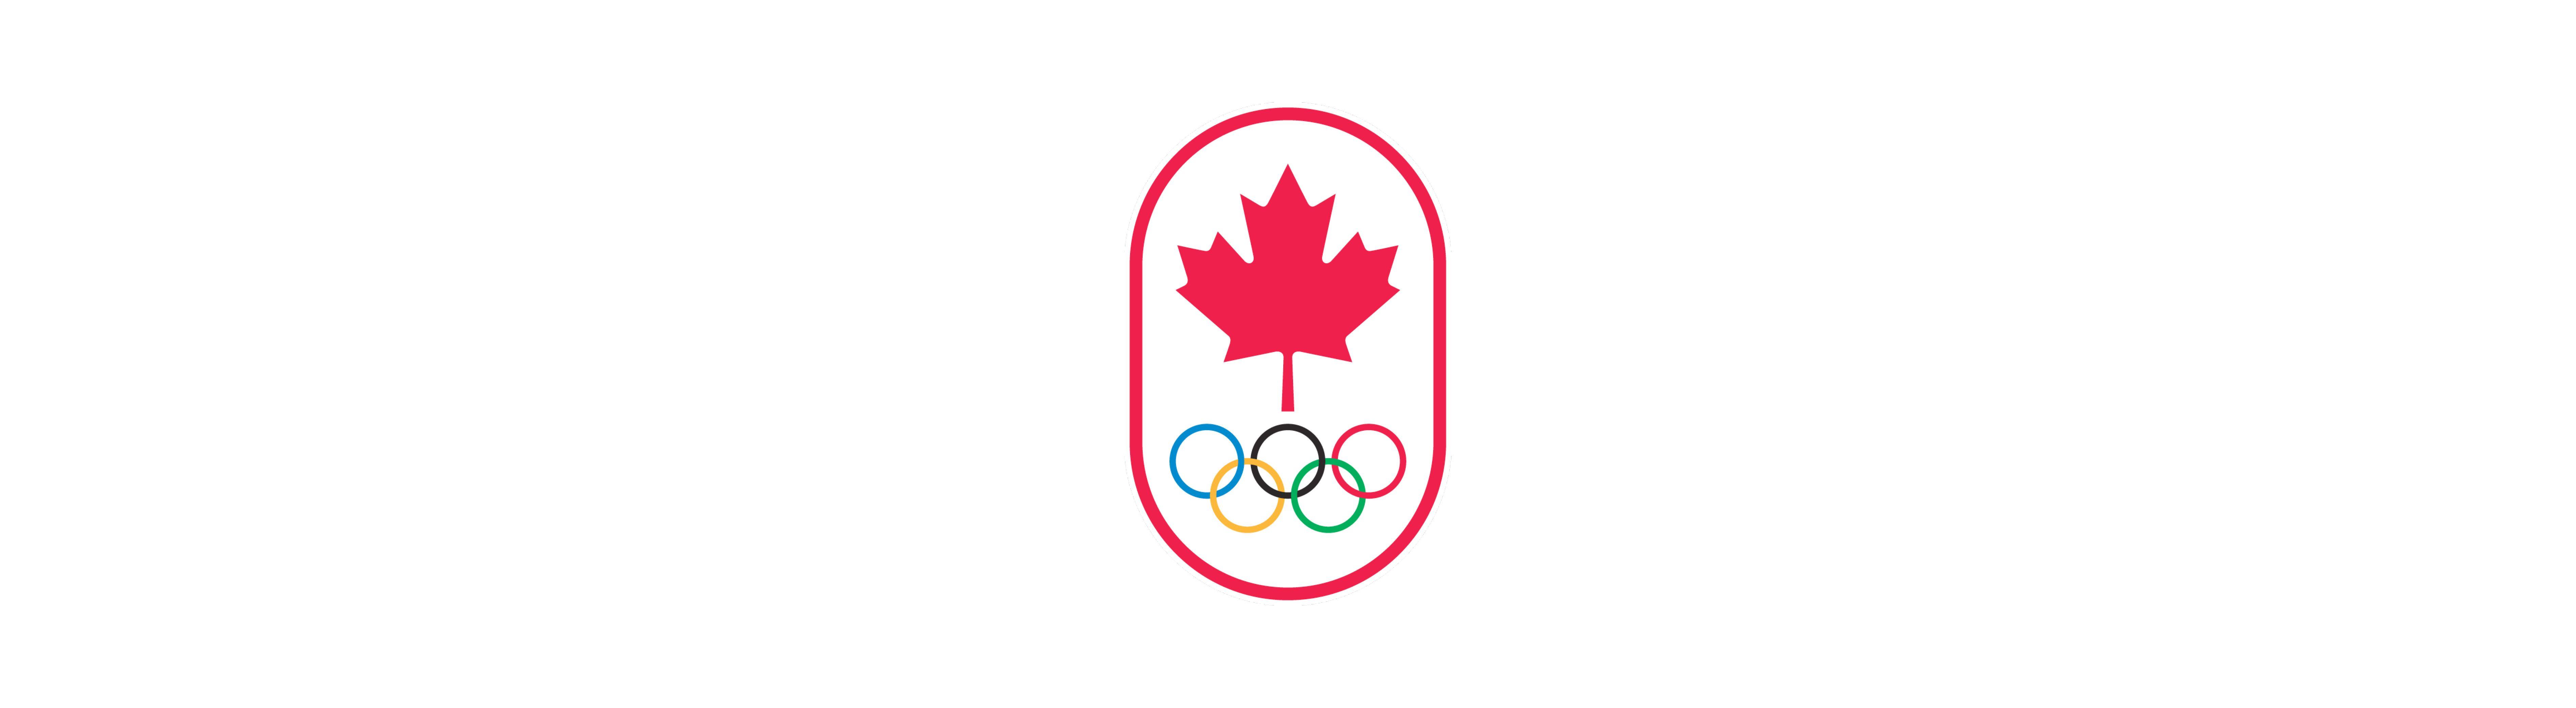 Cot Logo - COT Logo. Team Canada Olympic Team Website